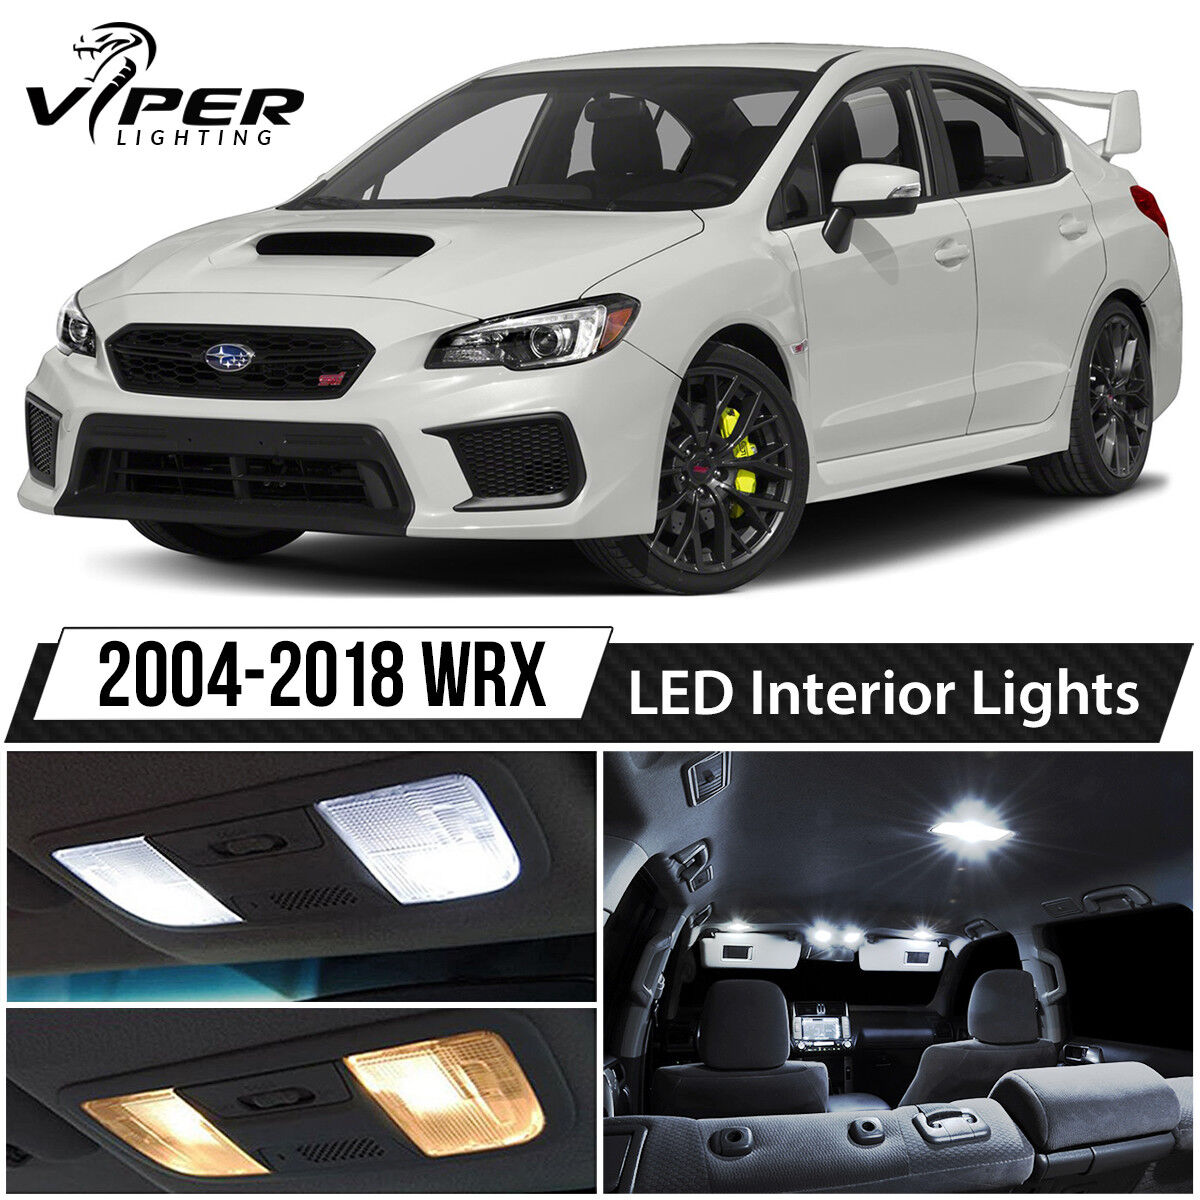 White LED Interior Lights Package Kit for 2004-2018 Subaru Impreza WRX STI